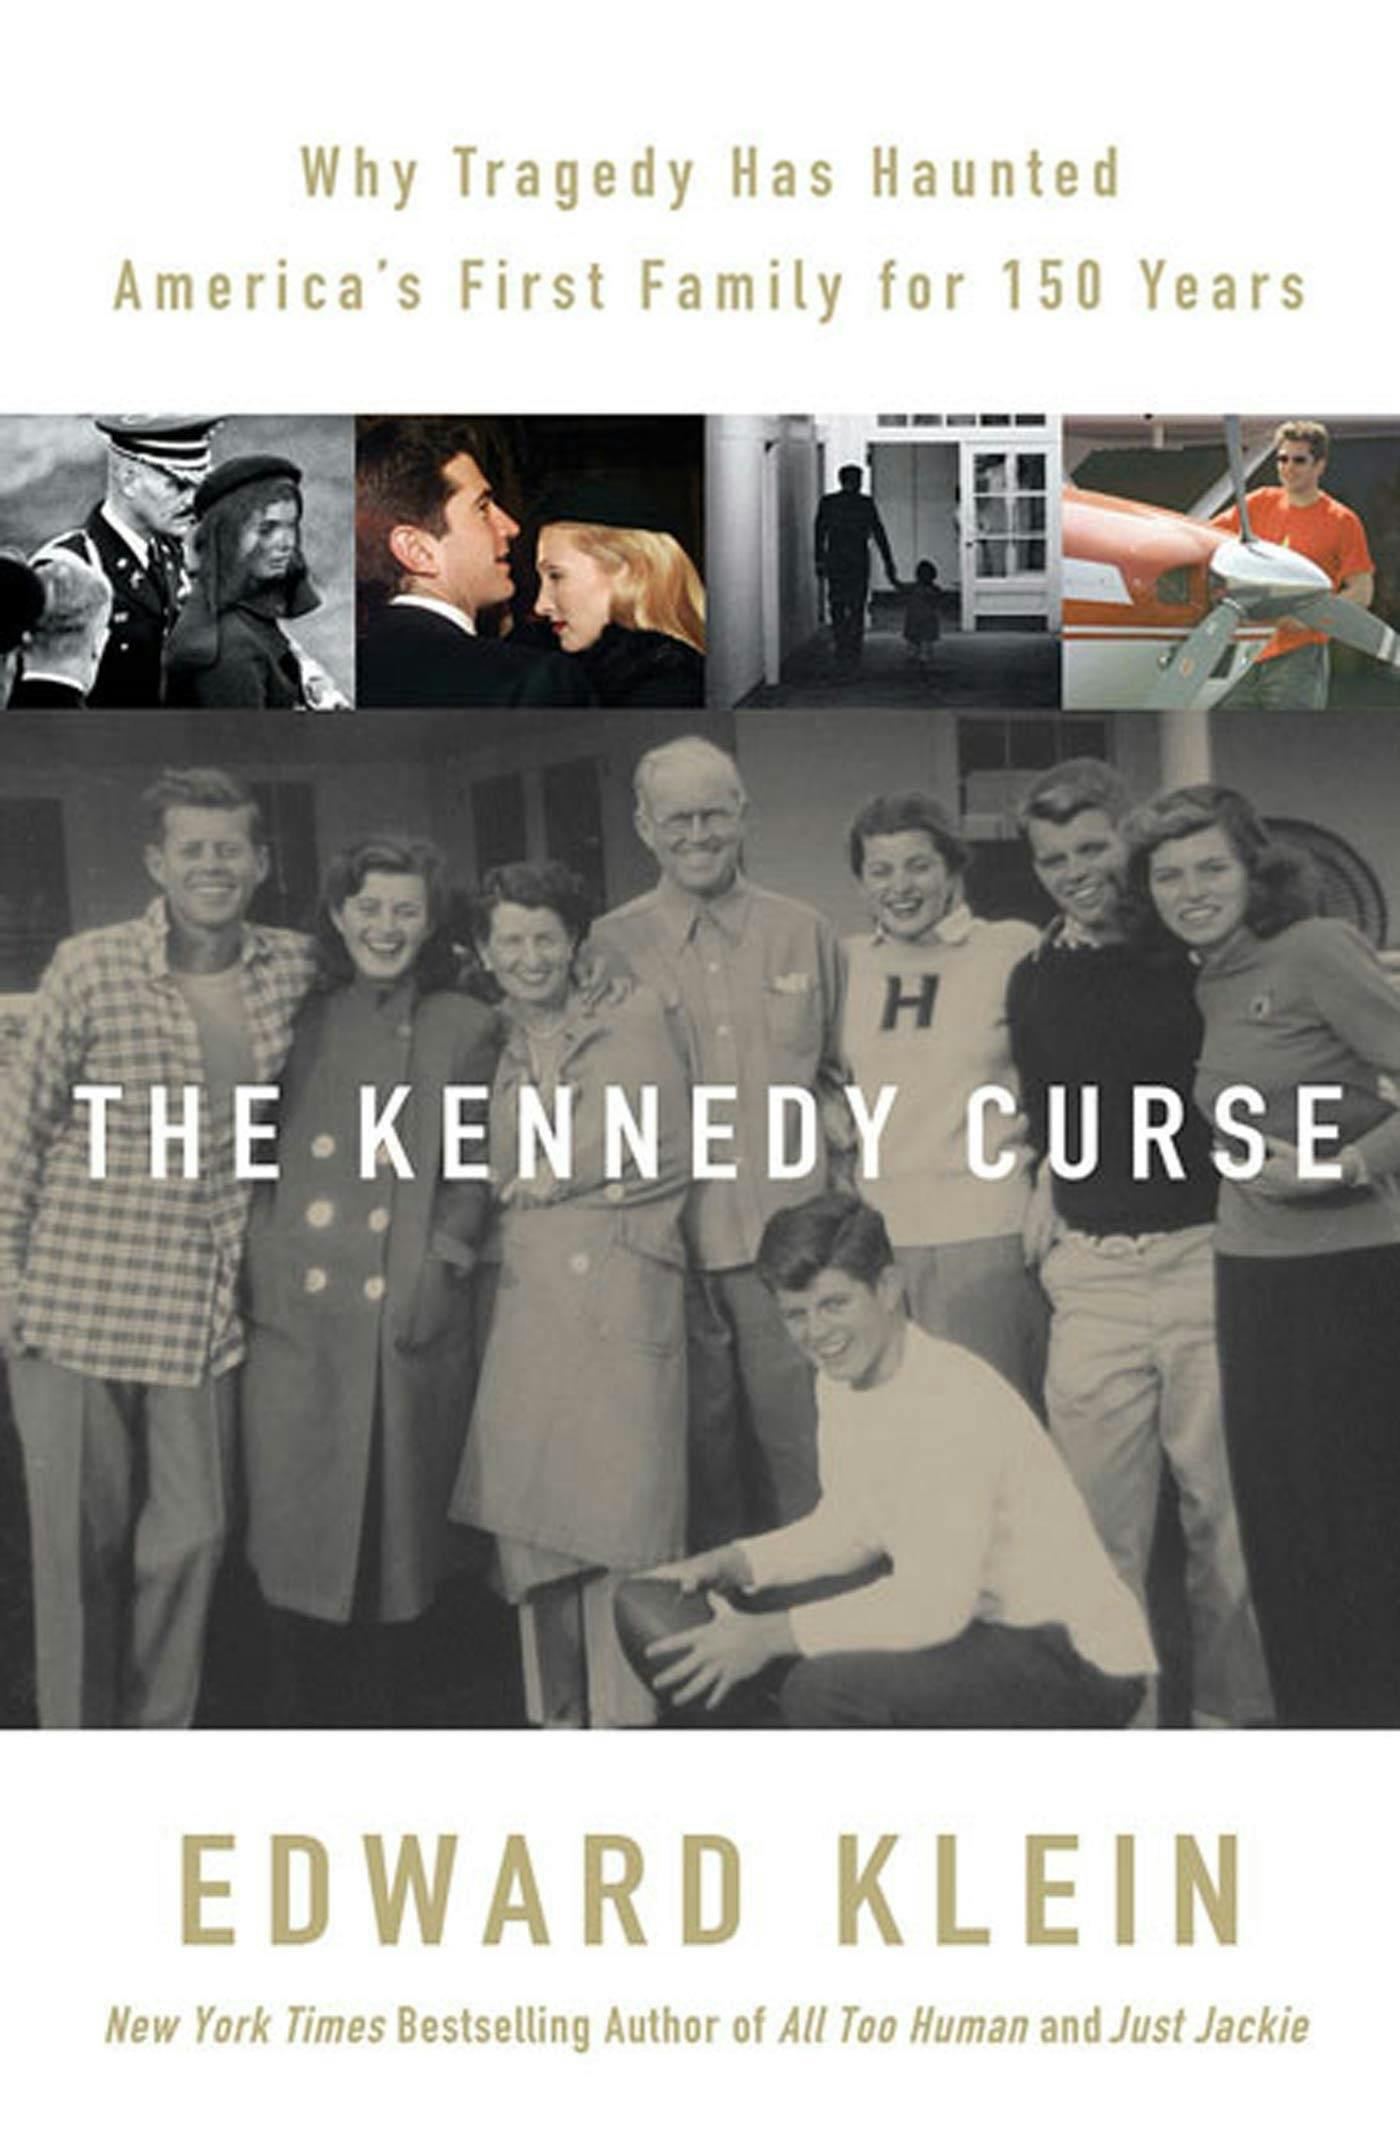 The Kennedy Curse photo